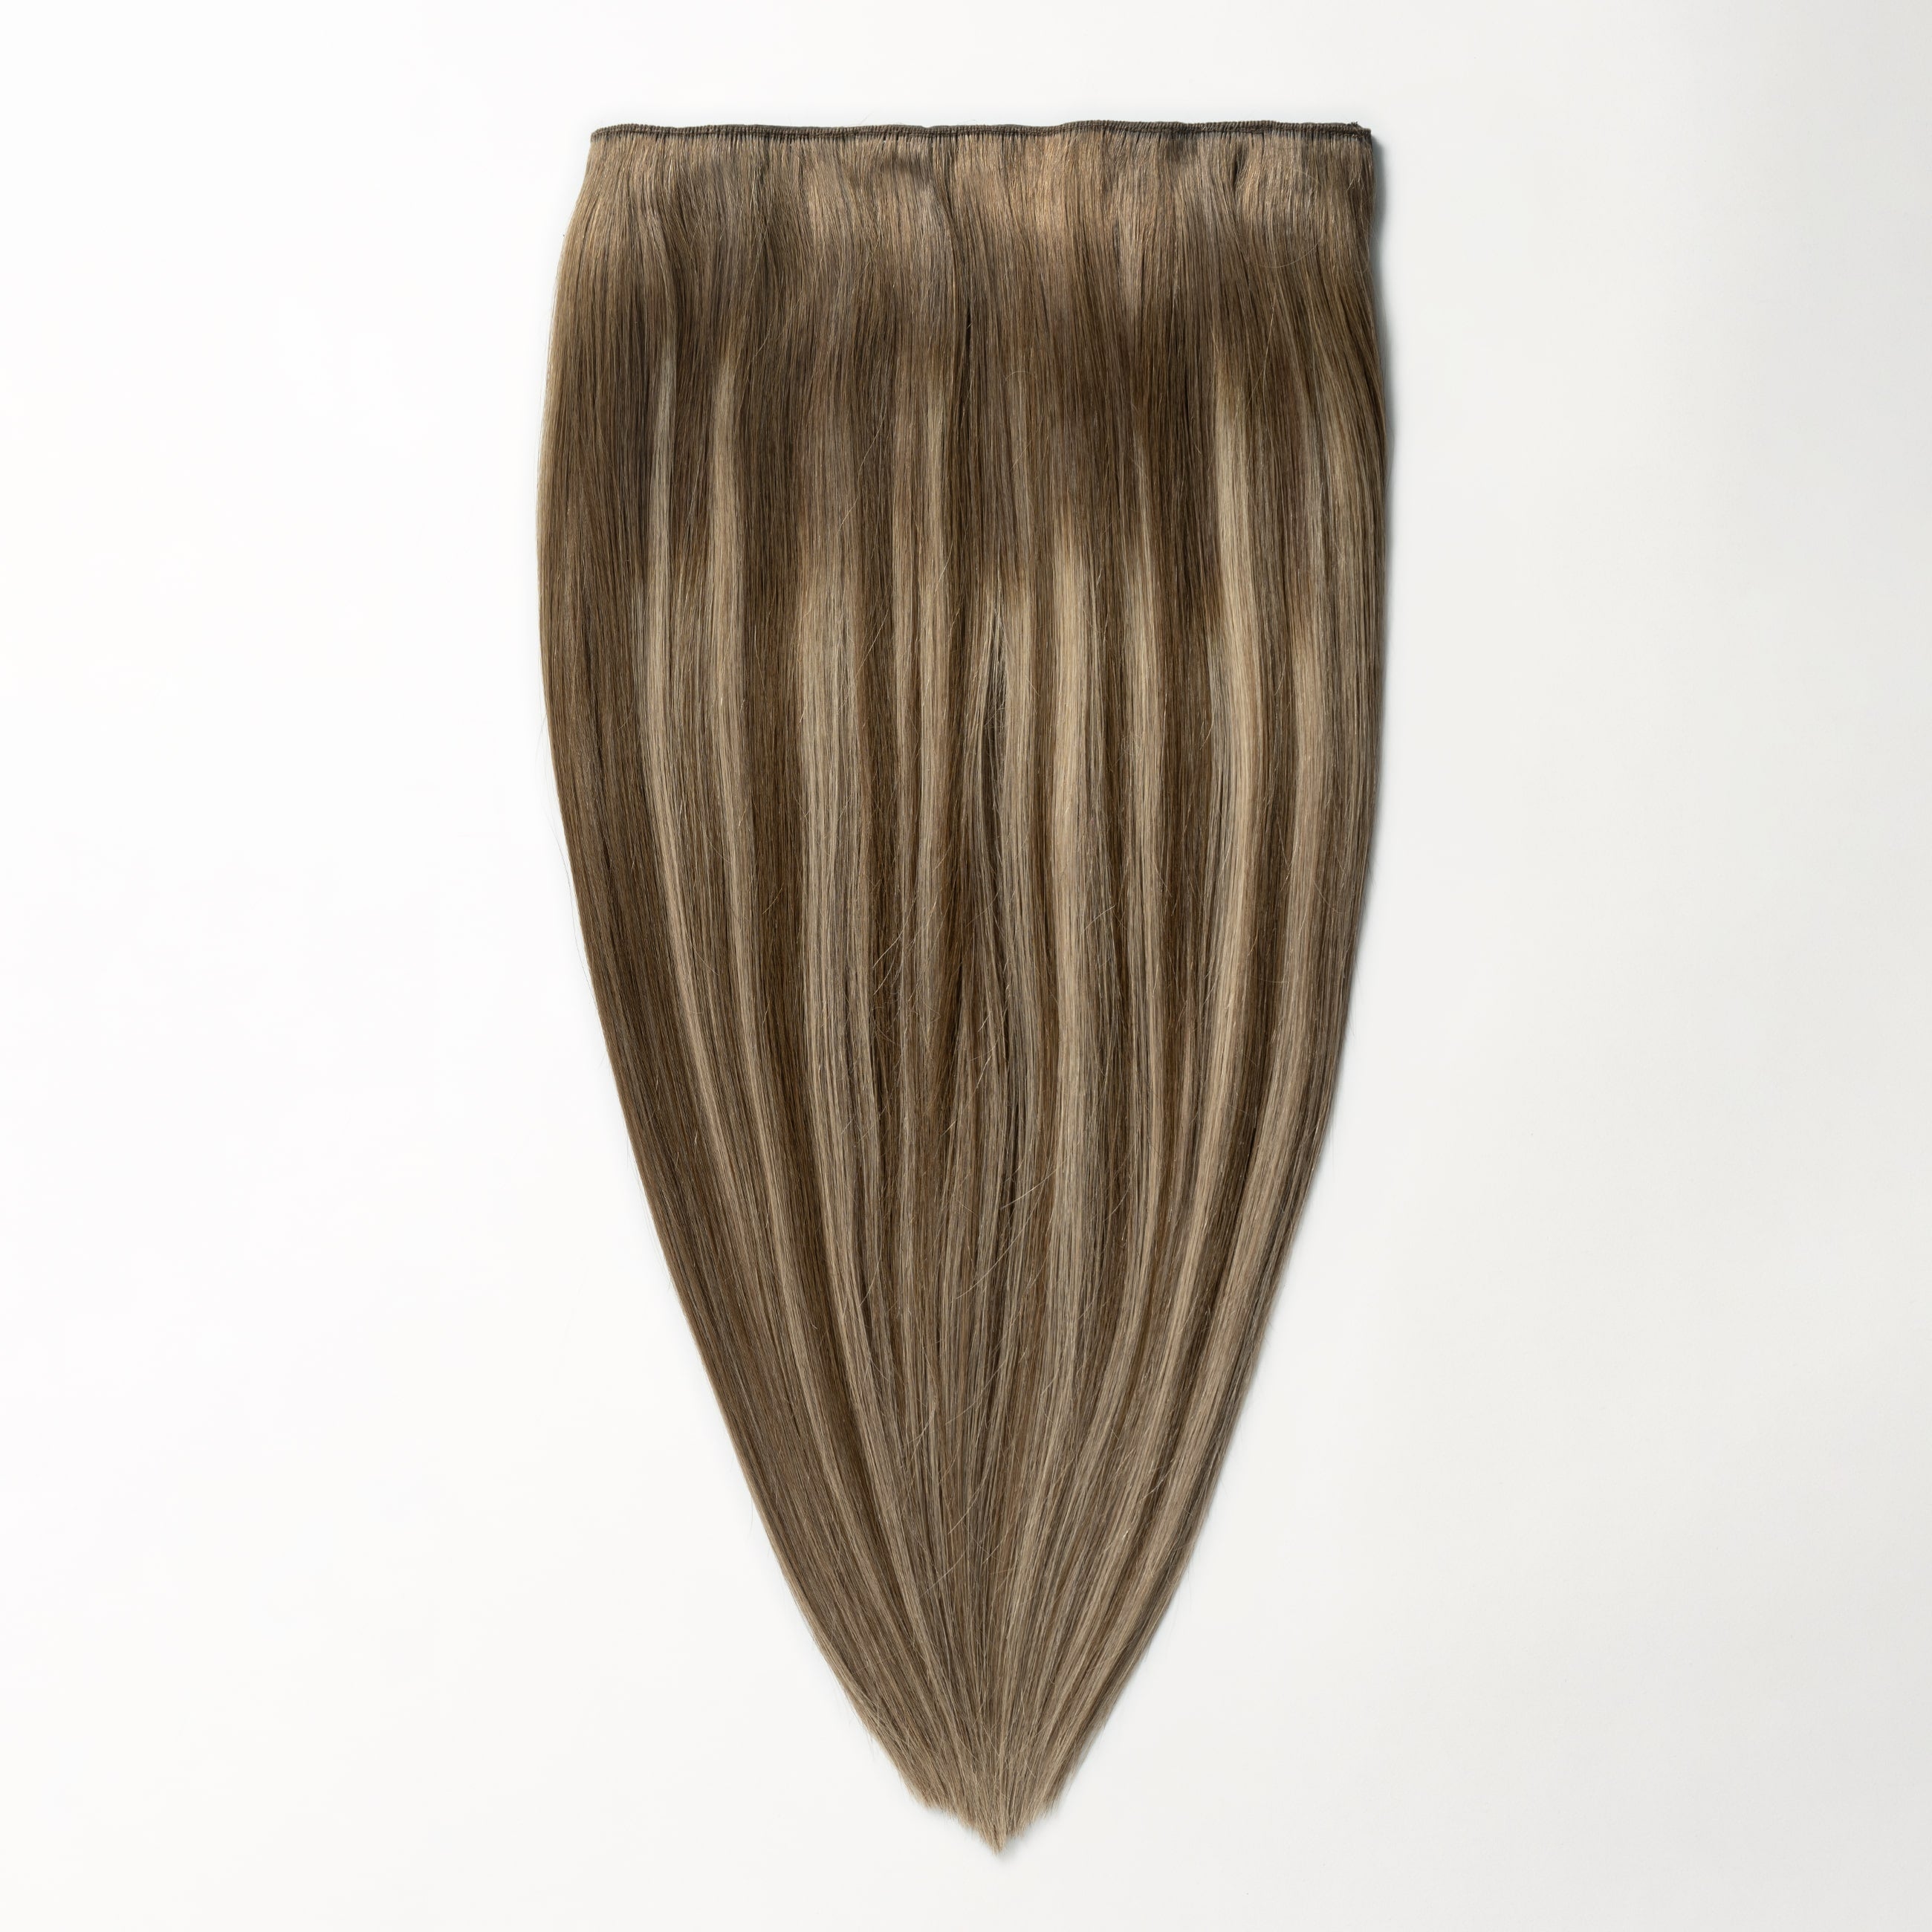 Halo hair extensions - Beige Blonde Balayage 3B+16B